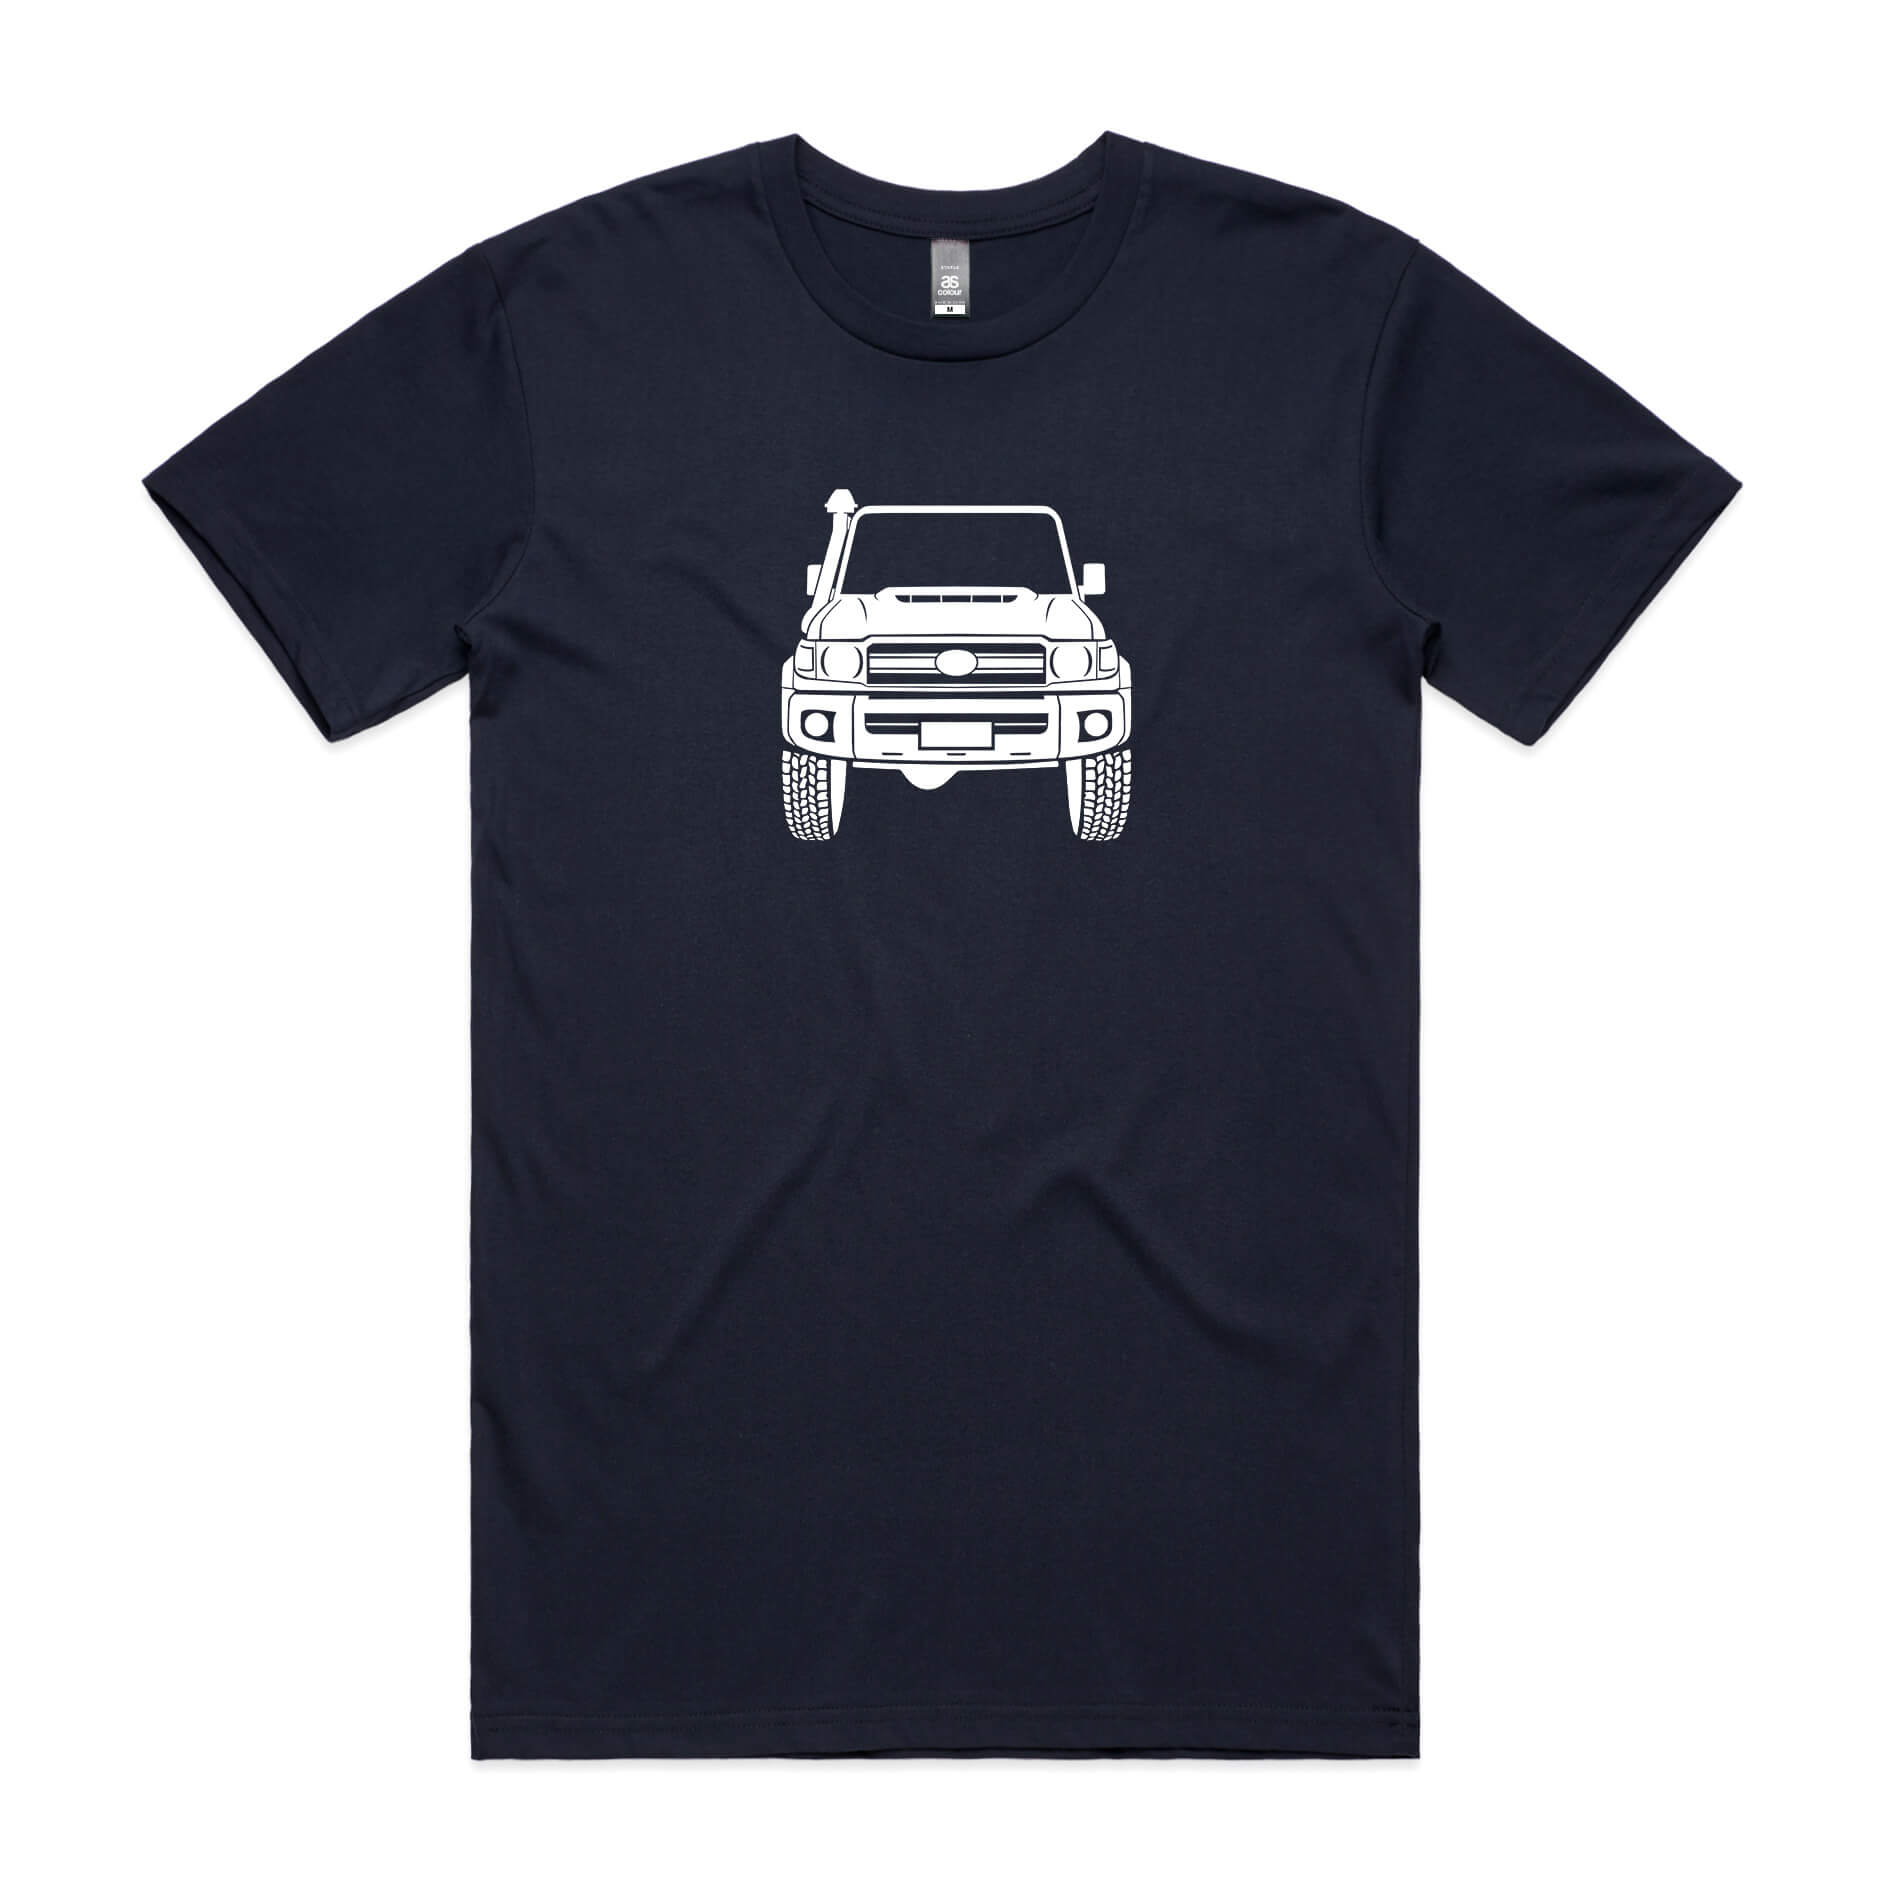 Toyota LandCruiser 70 t-shirt in navy blue